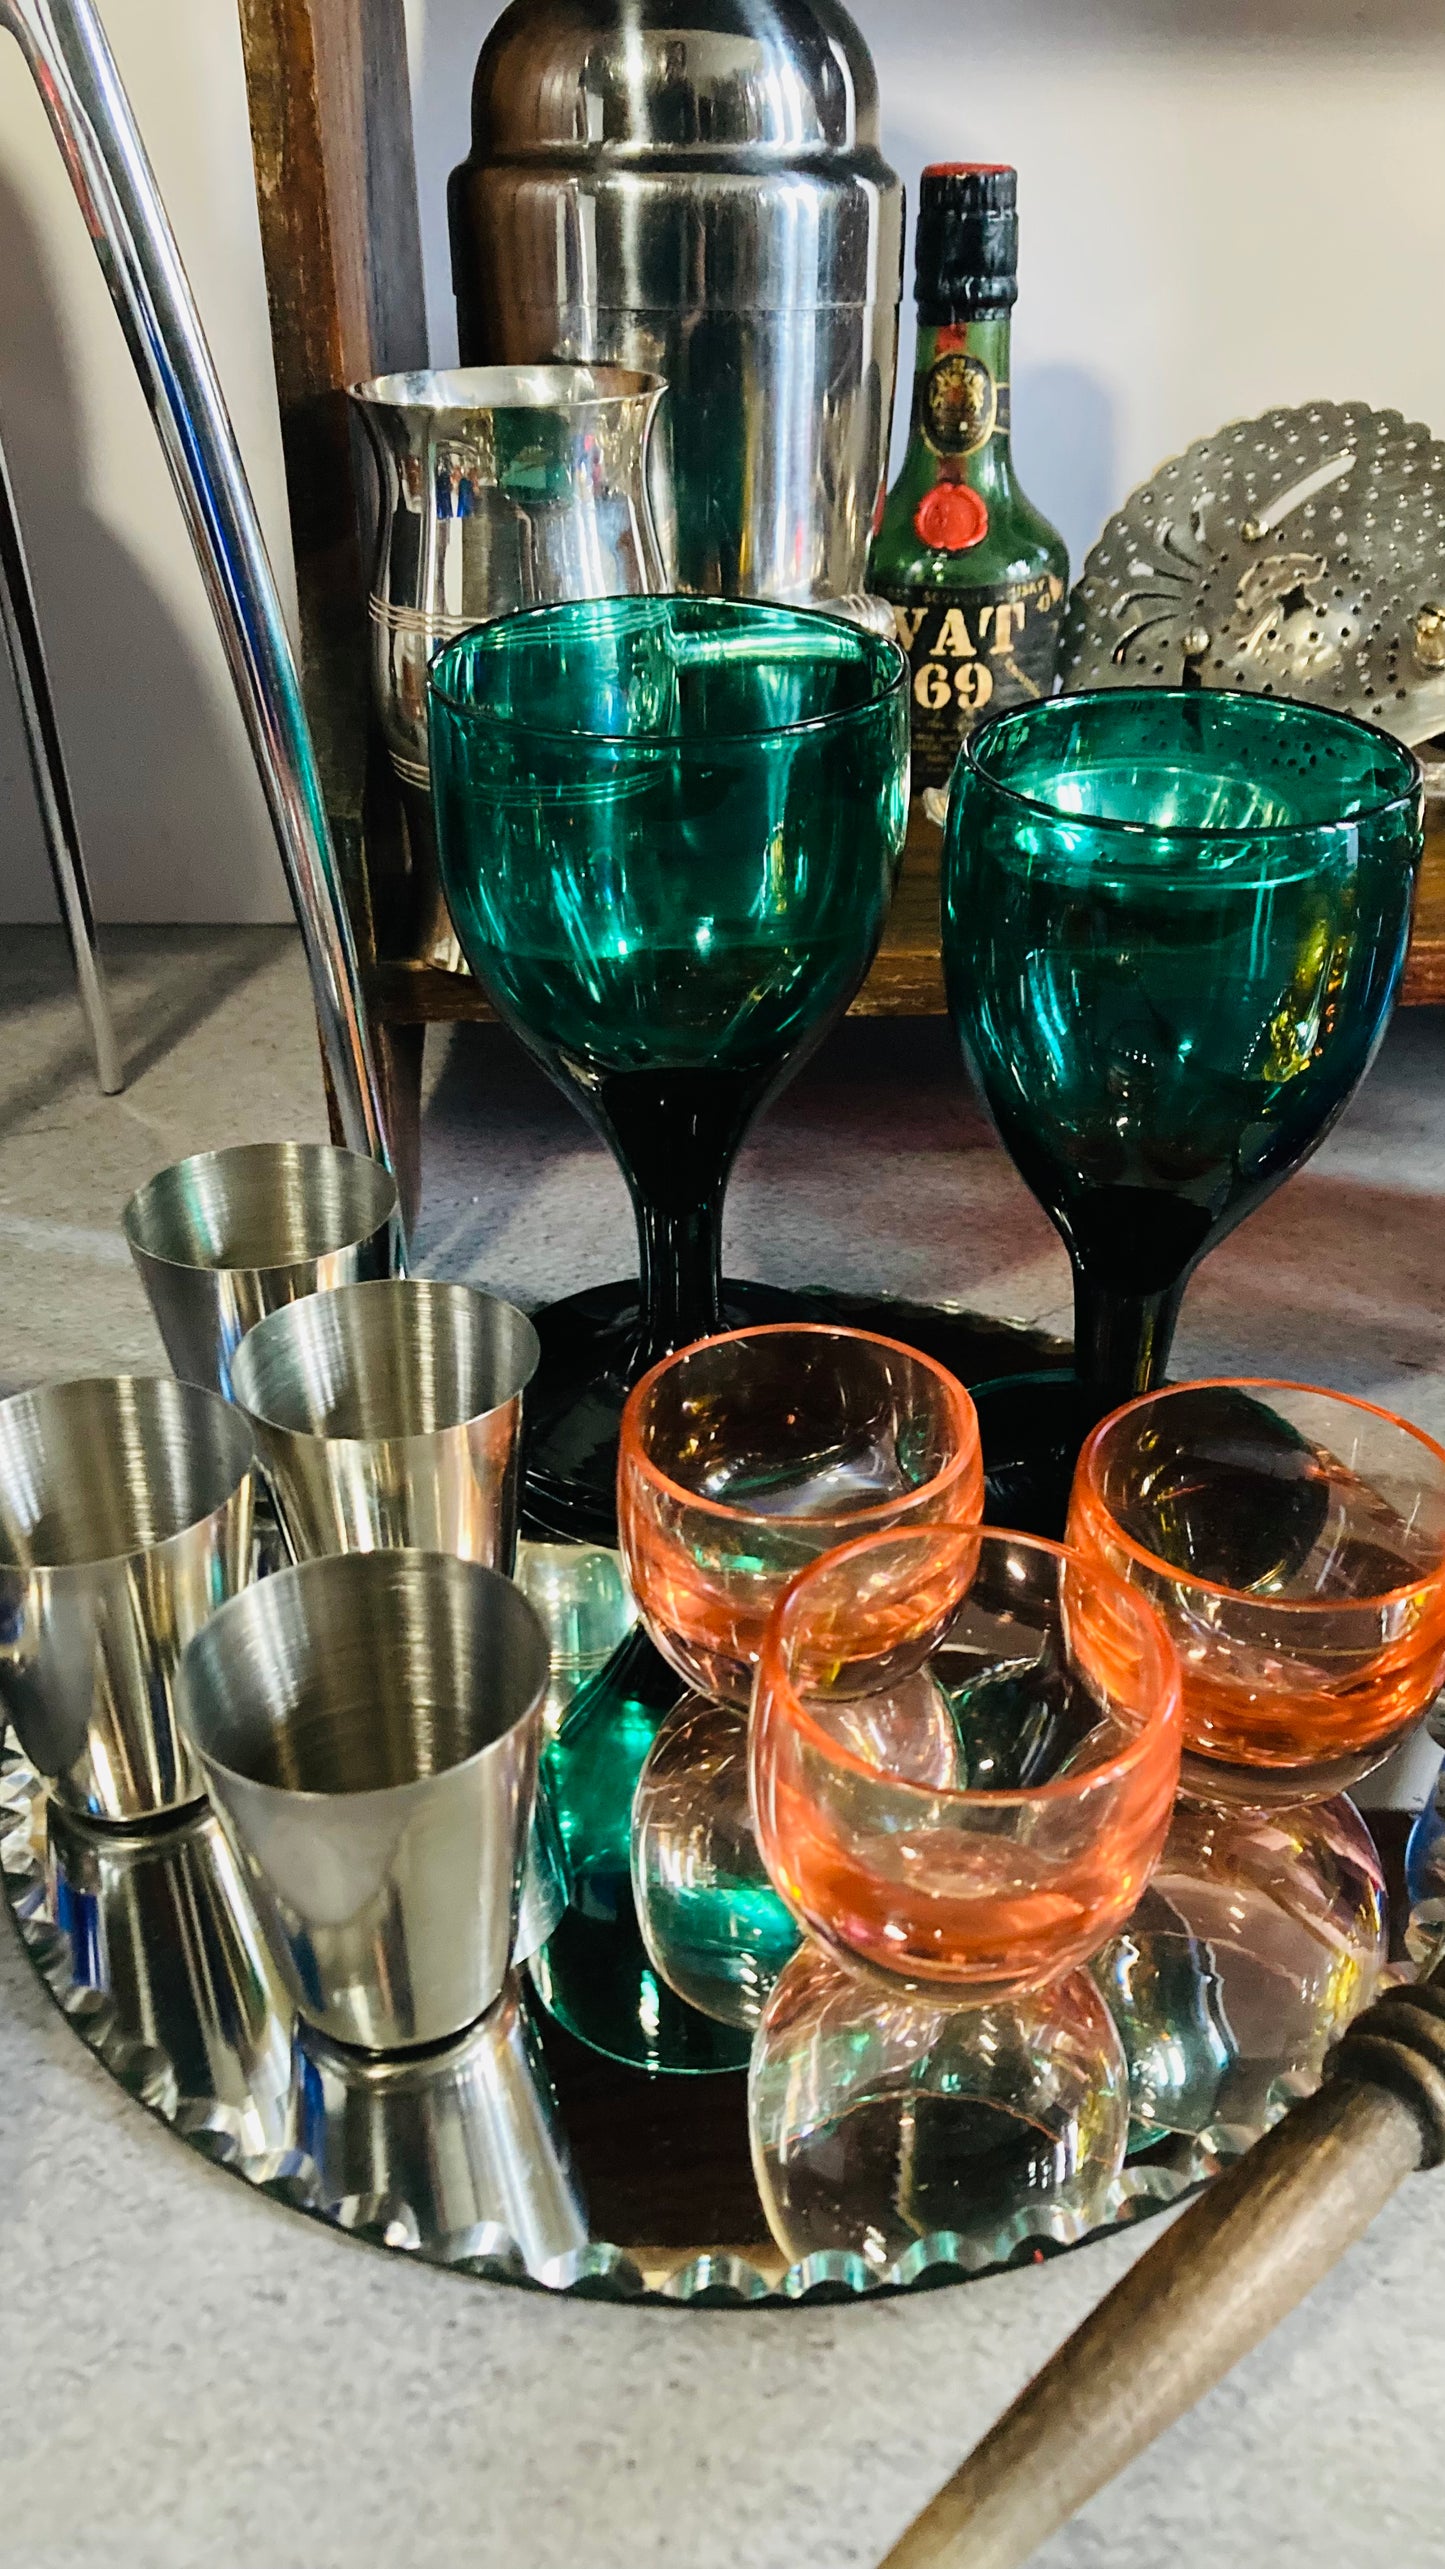 The Striper Michael - Antique Hand Blown Turquoise Wine Glasses